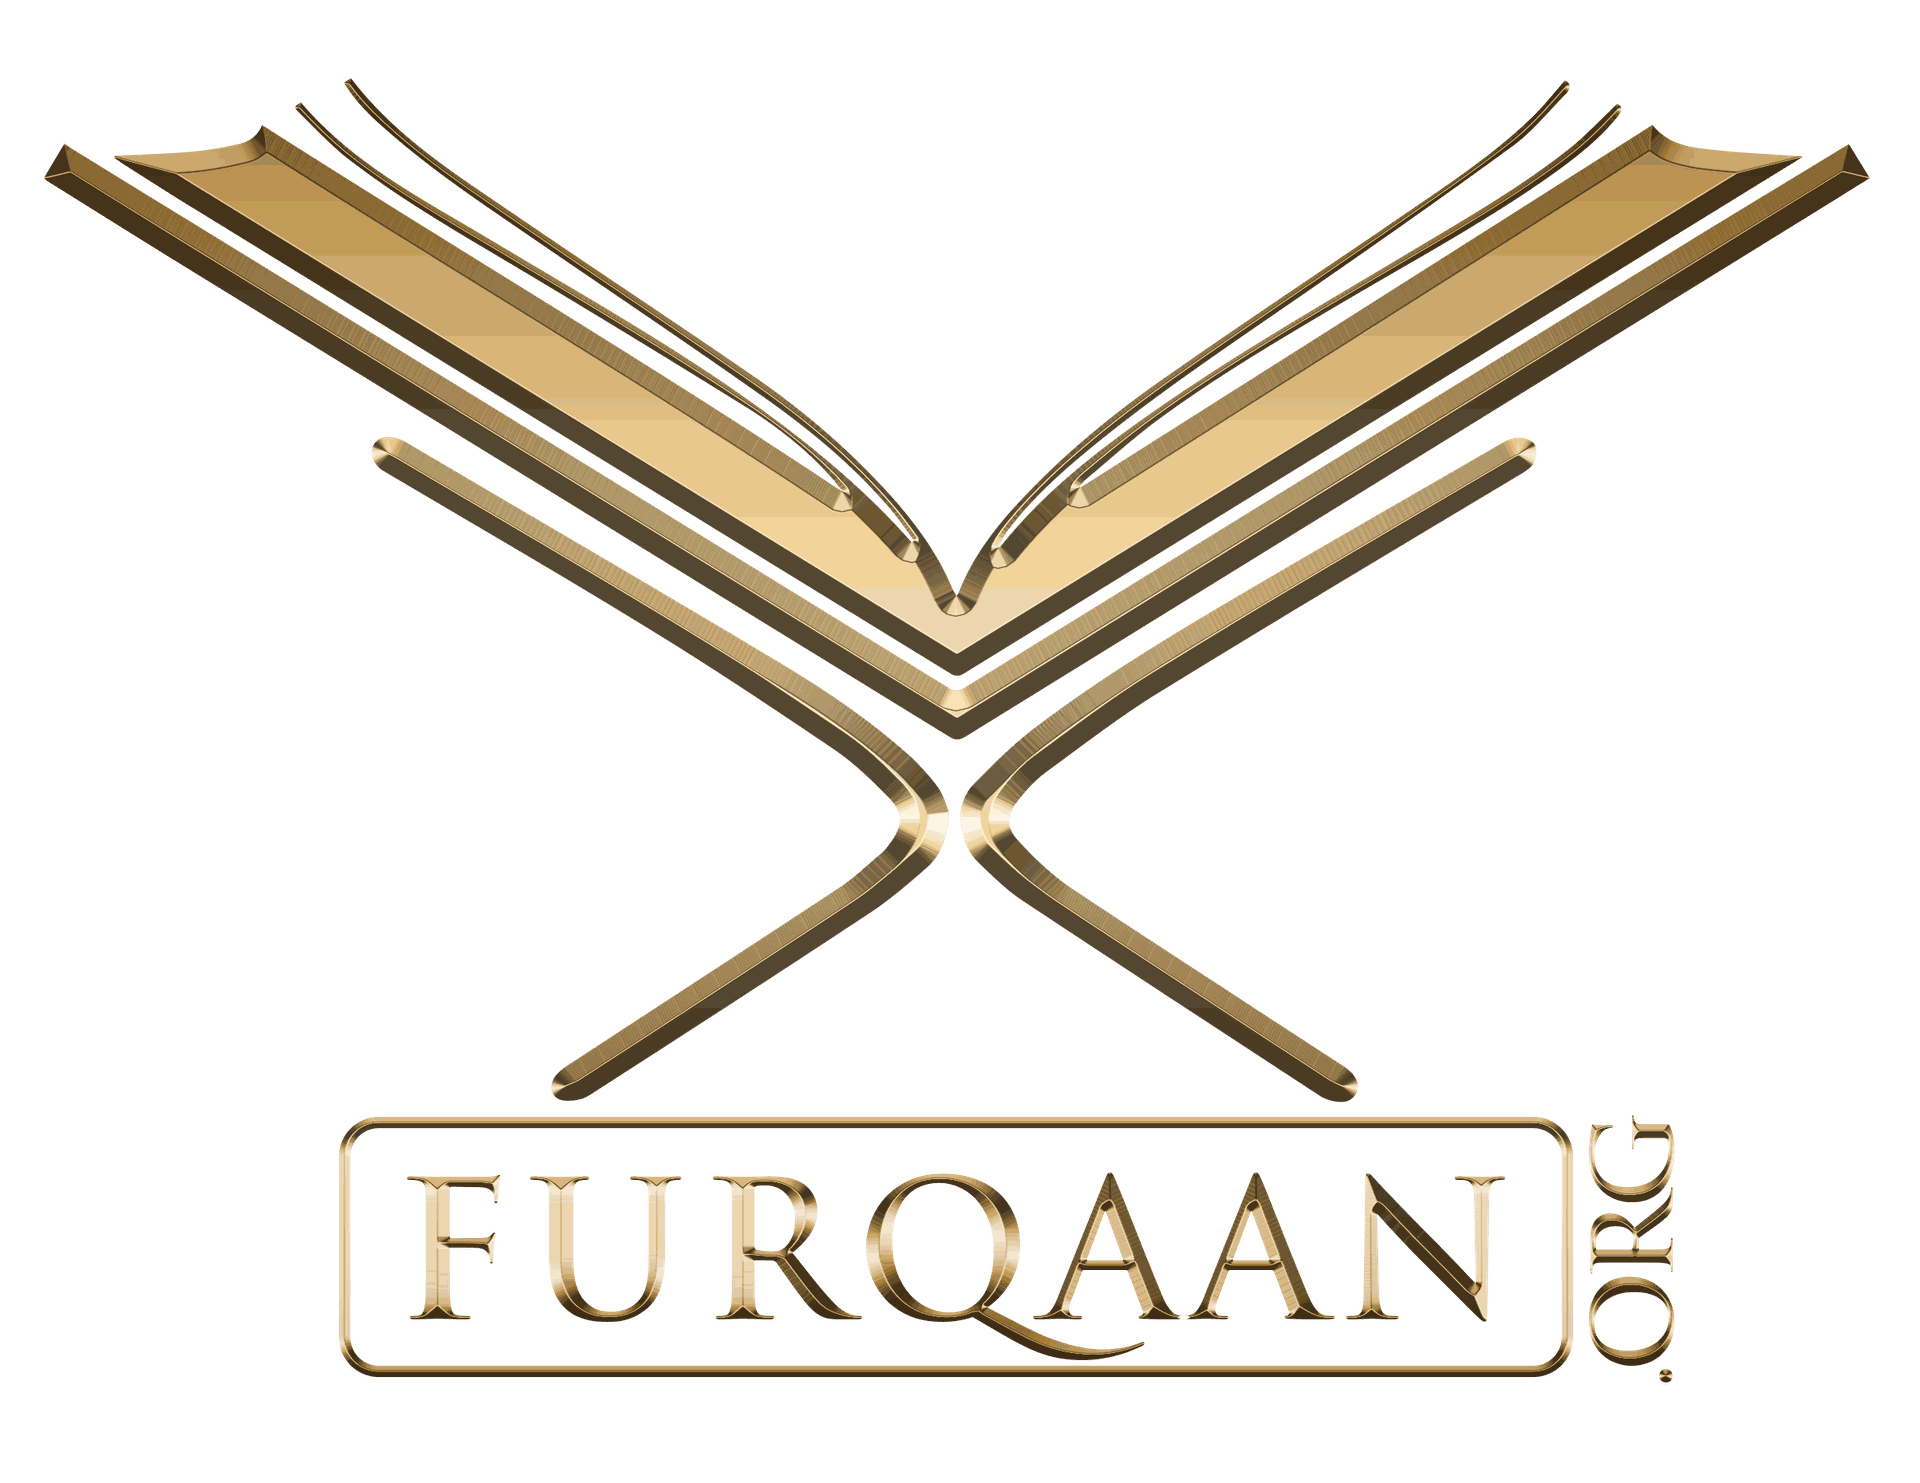 Brand: Al Furqaan Foundation